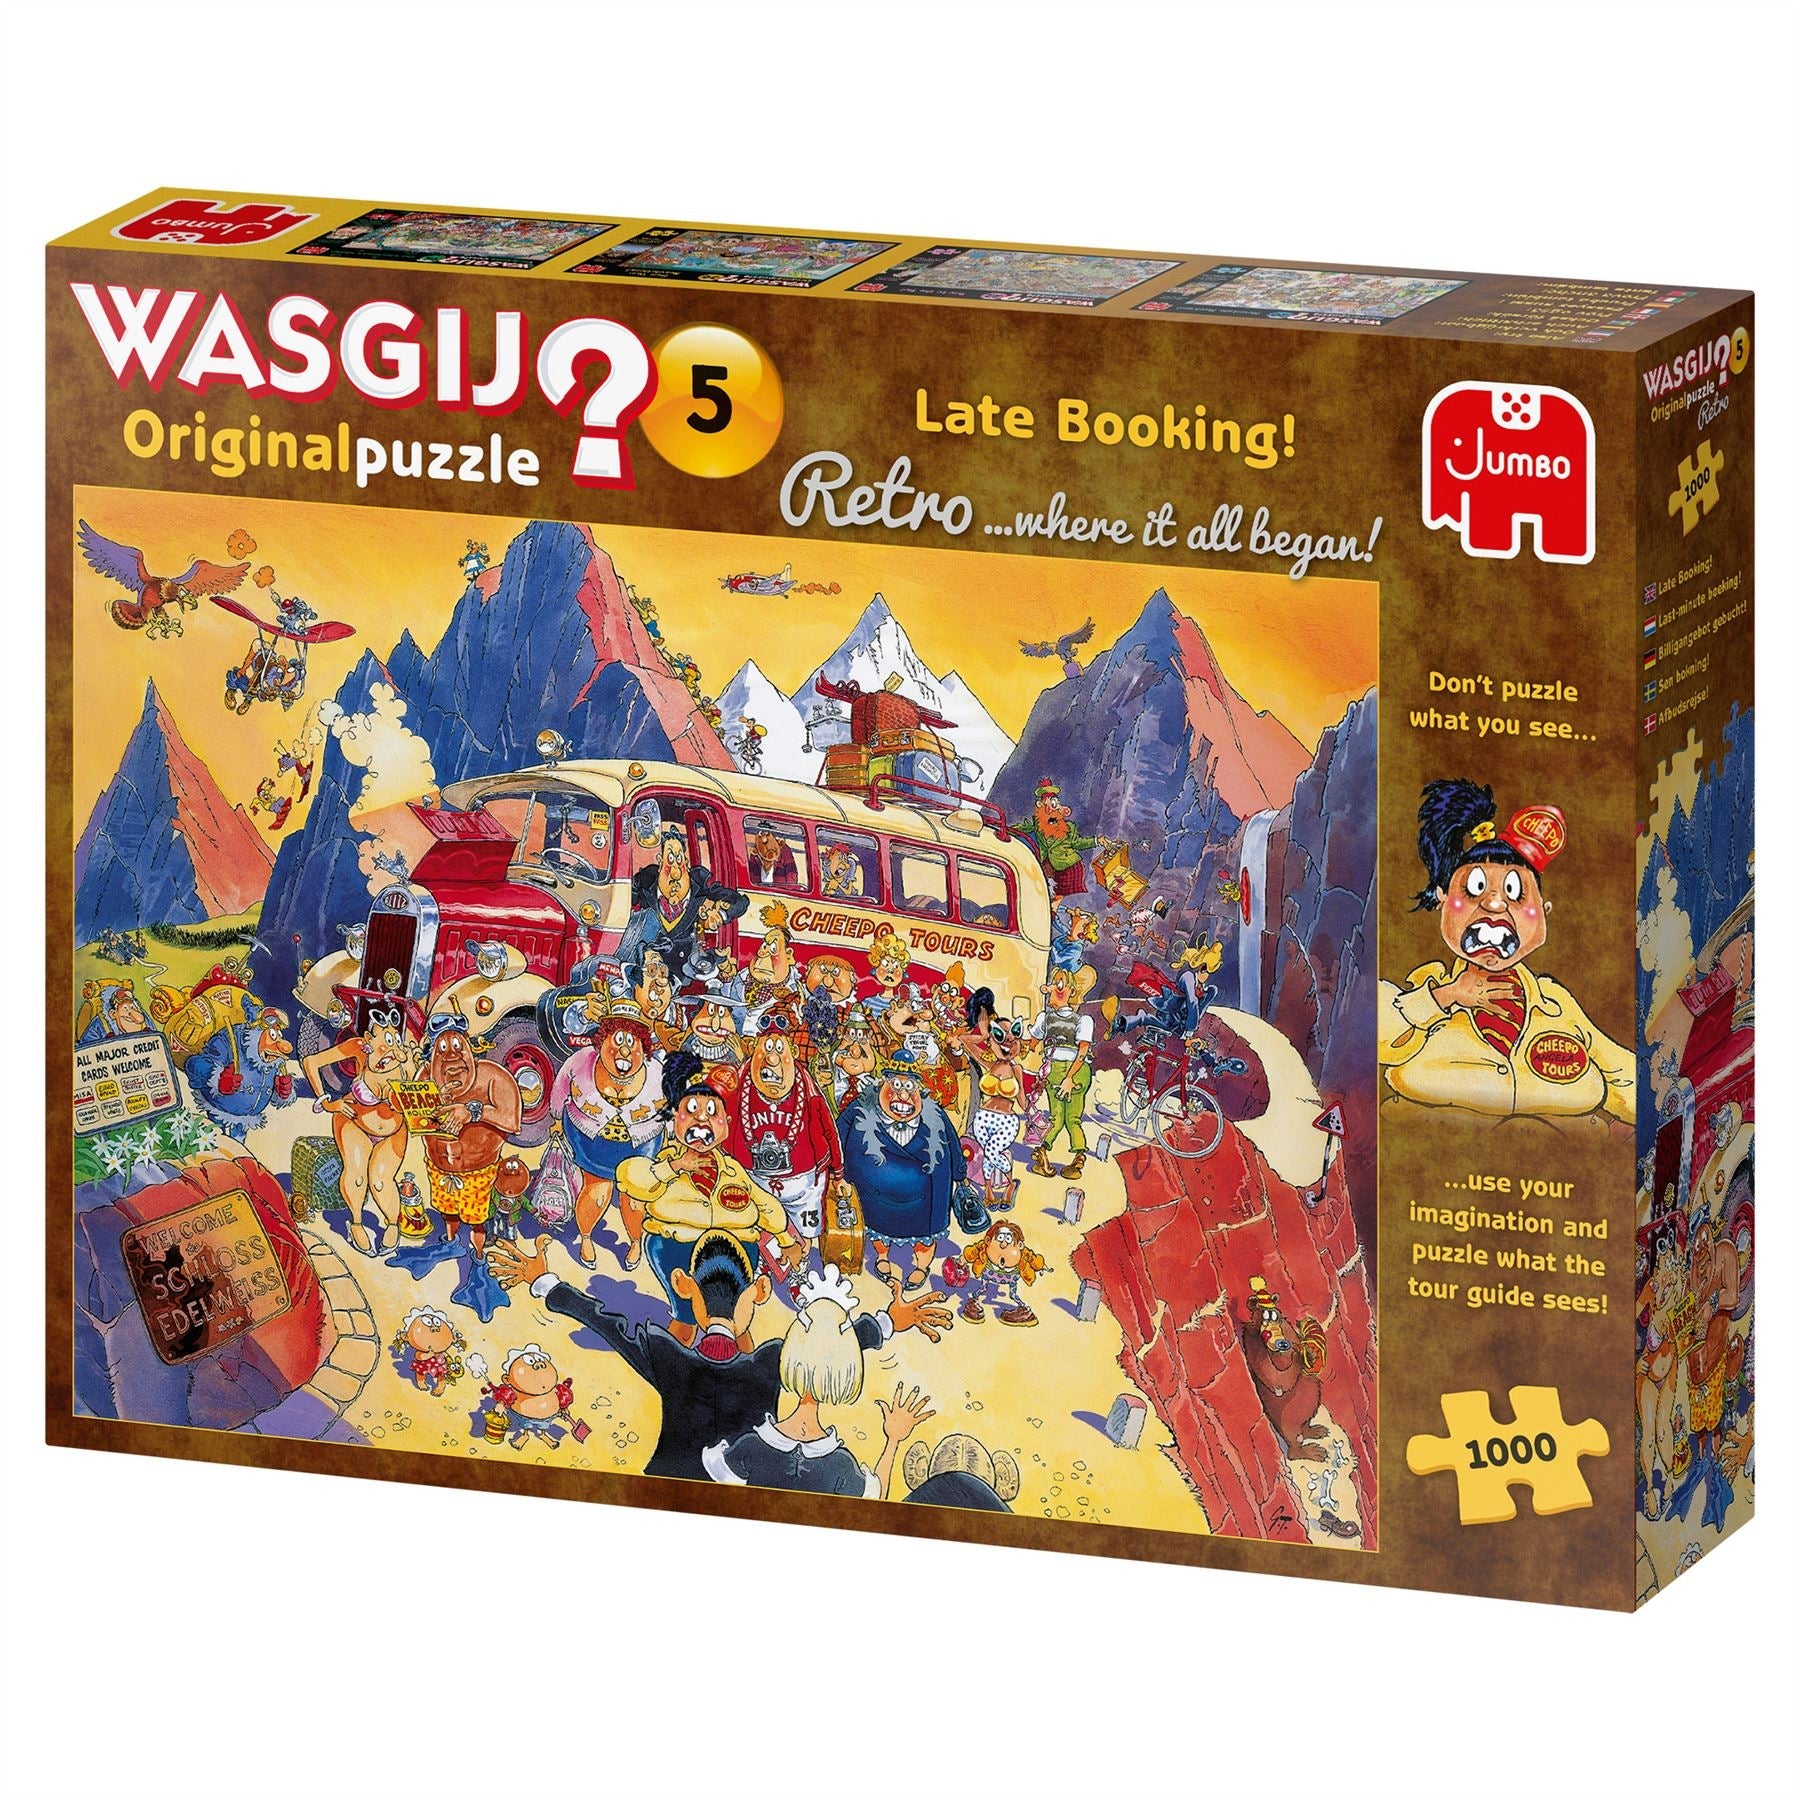 Wasgij Retro Original 5 Late Booking! 1000 Piece Jigsaw Puzzle